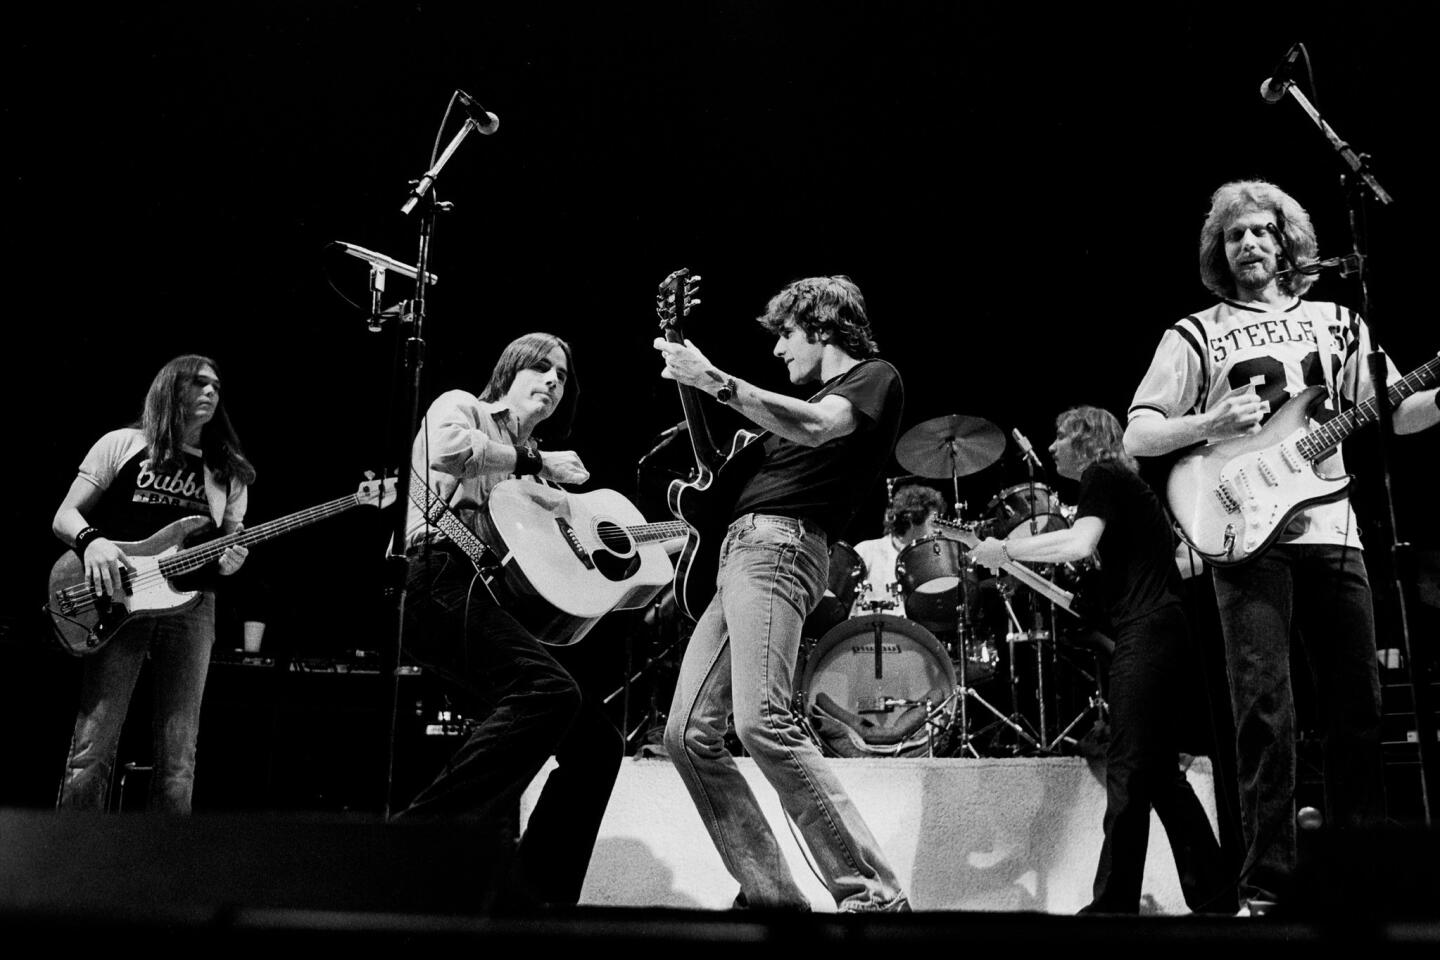 The Last Days of Glenn Frey: Heartache Tonight' airs Sunday on HLN